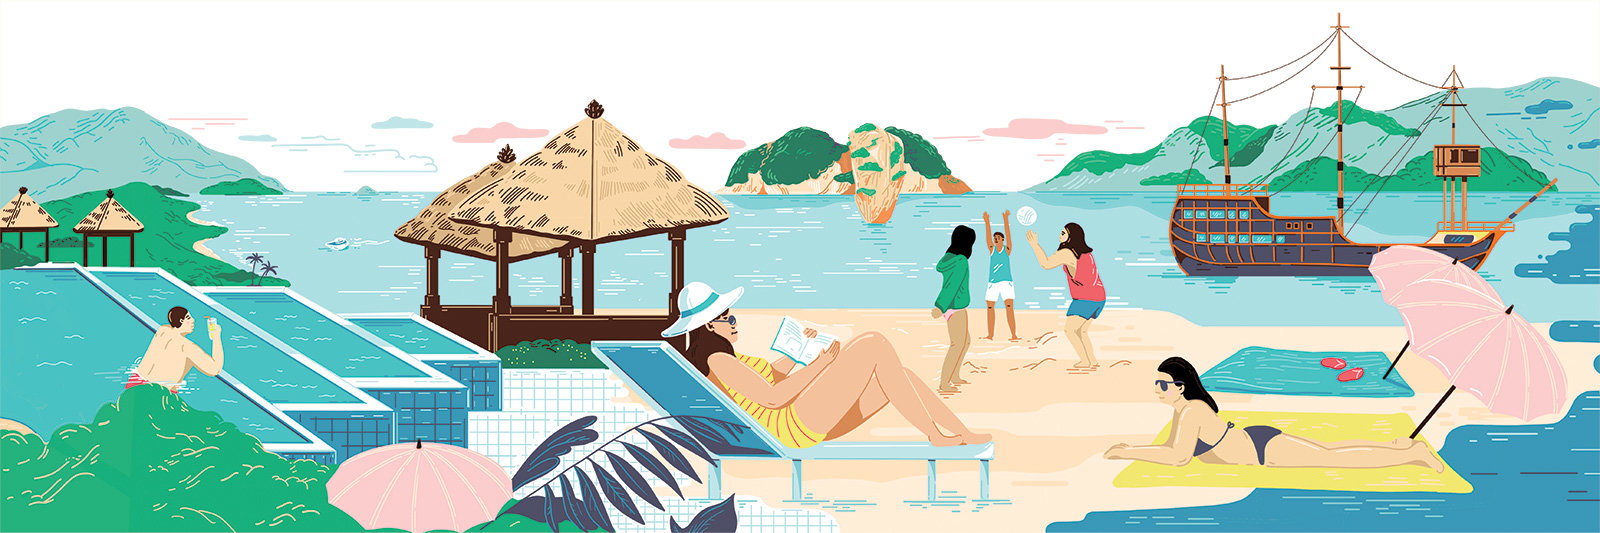 millennials-chinese-new-year-travel-habits-kathleen-fu-chinese-tourists-beach-illustration